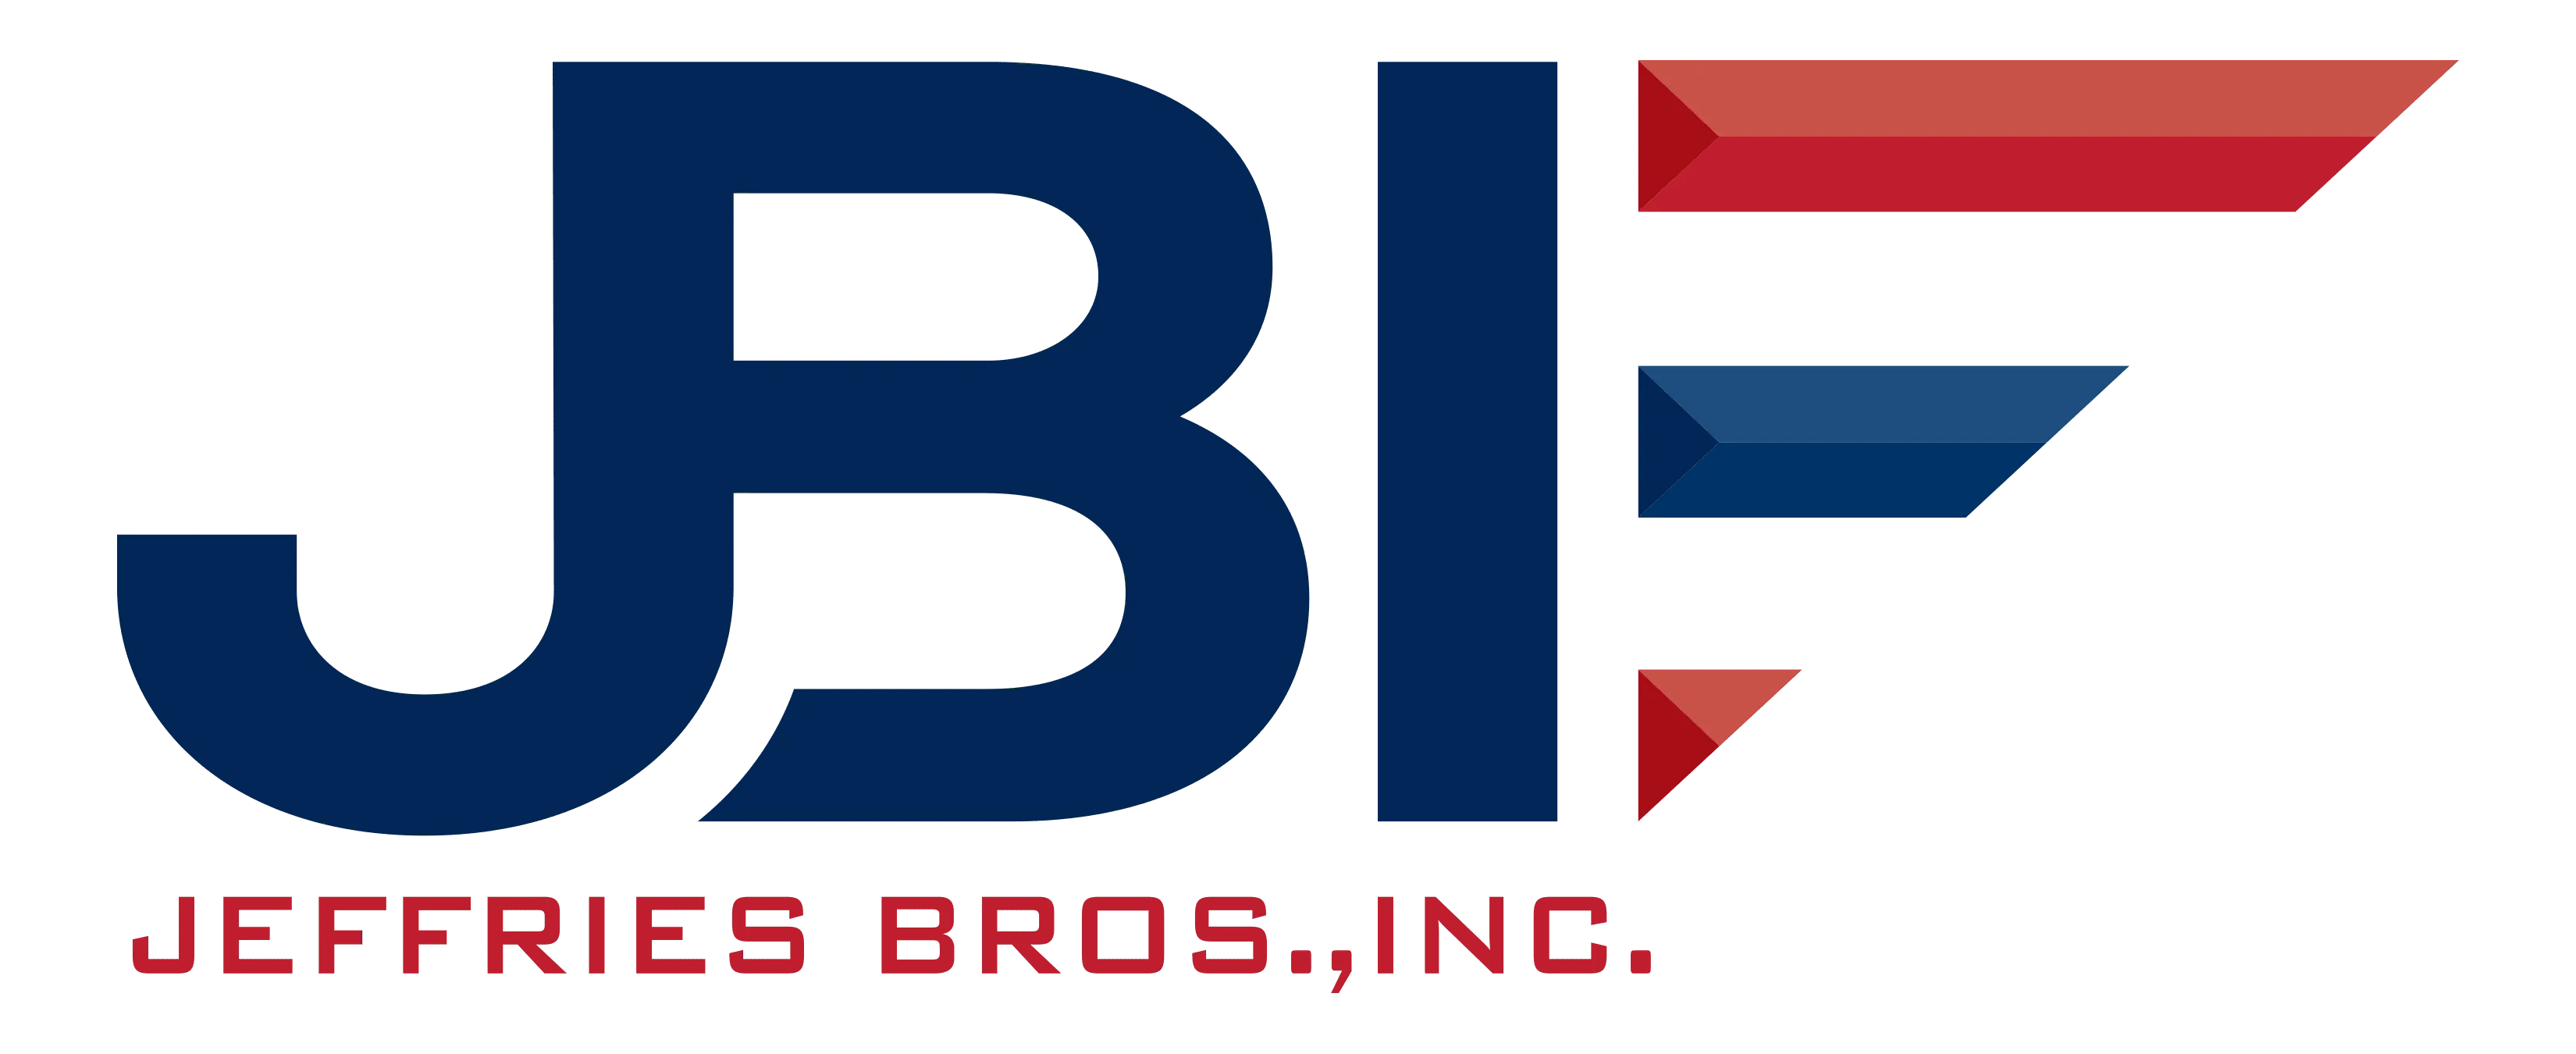 Jeffries Bros logo